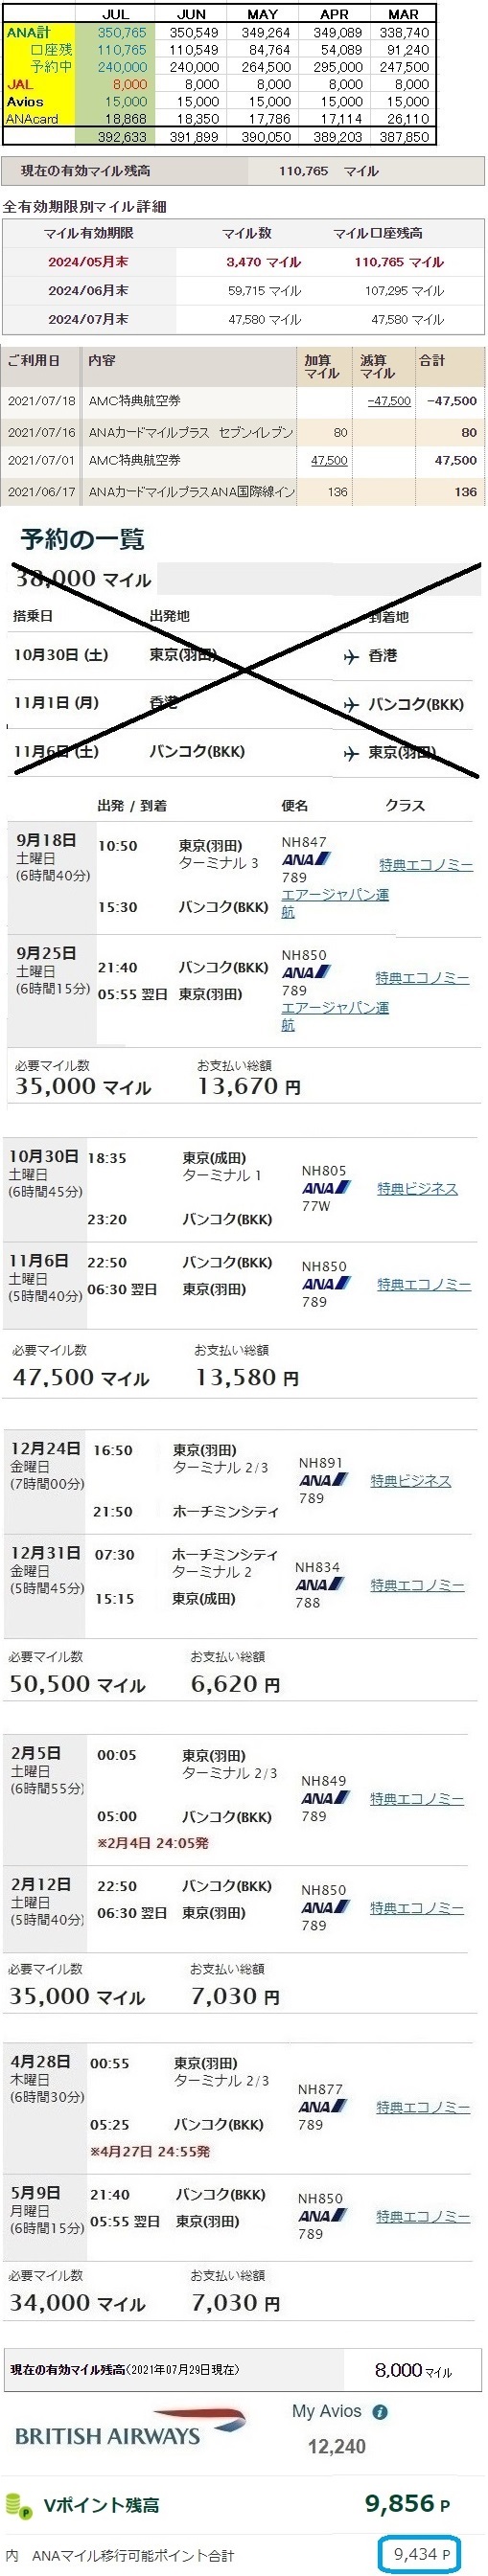 【ANAマイル】 累計獲得938,265M→587,500M搭乗